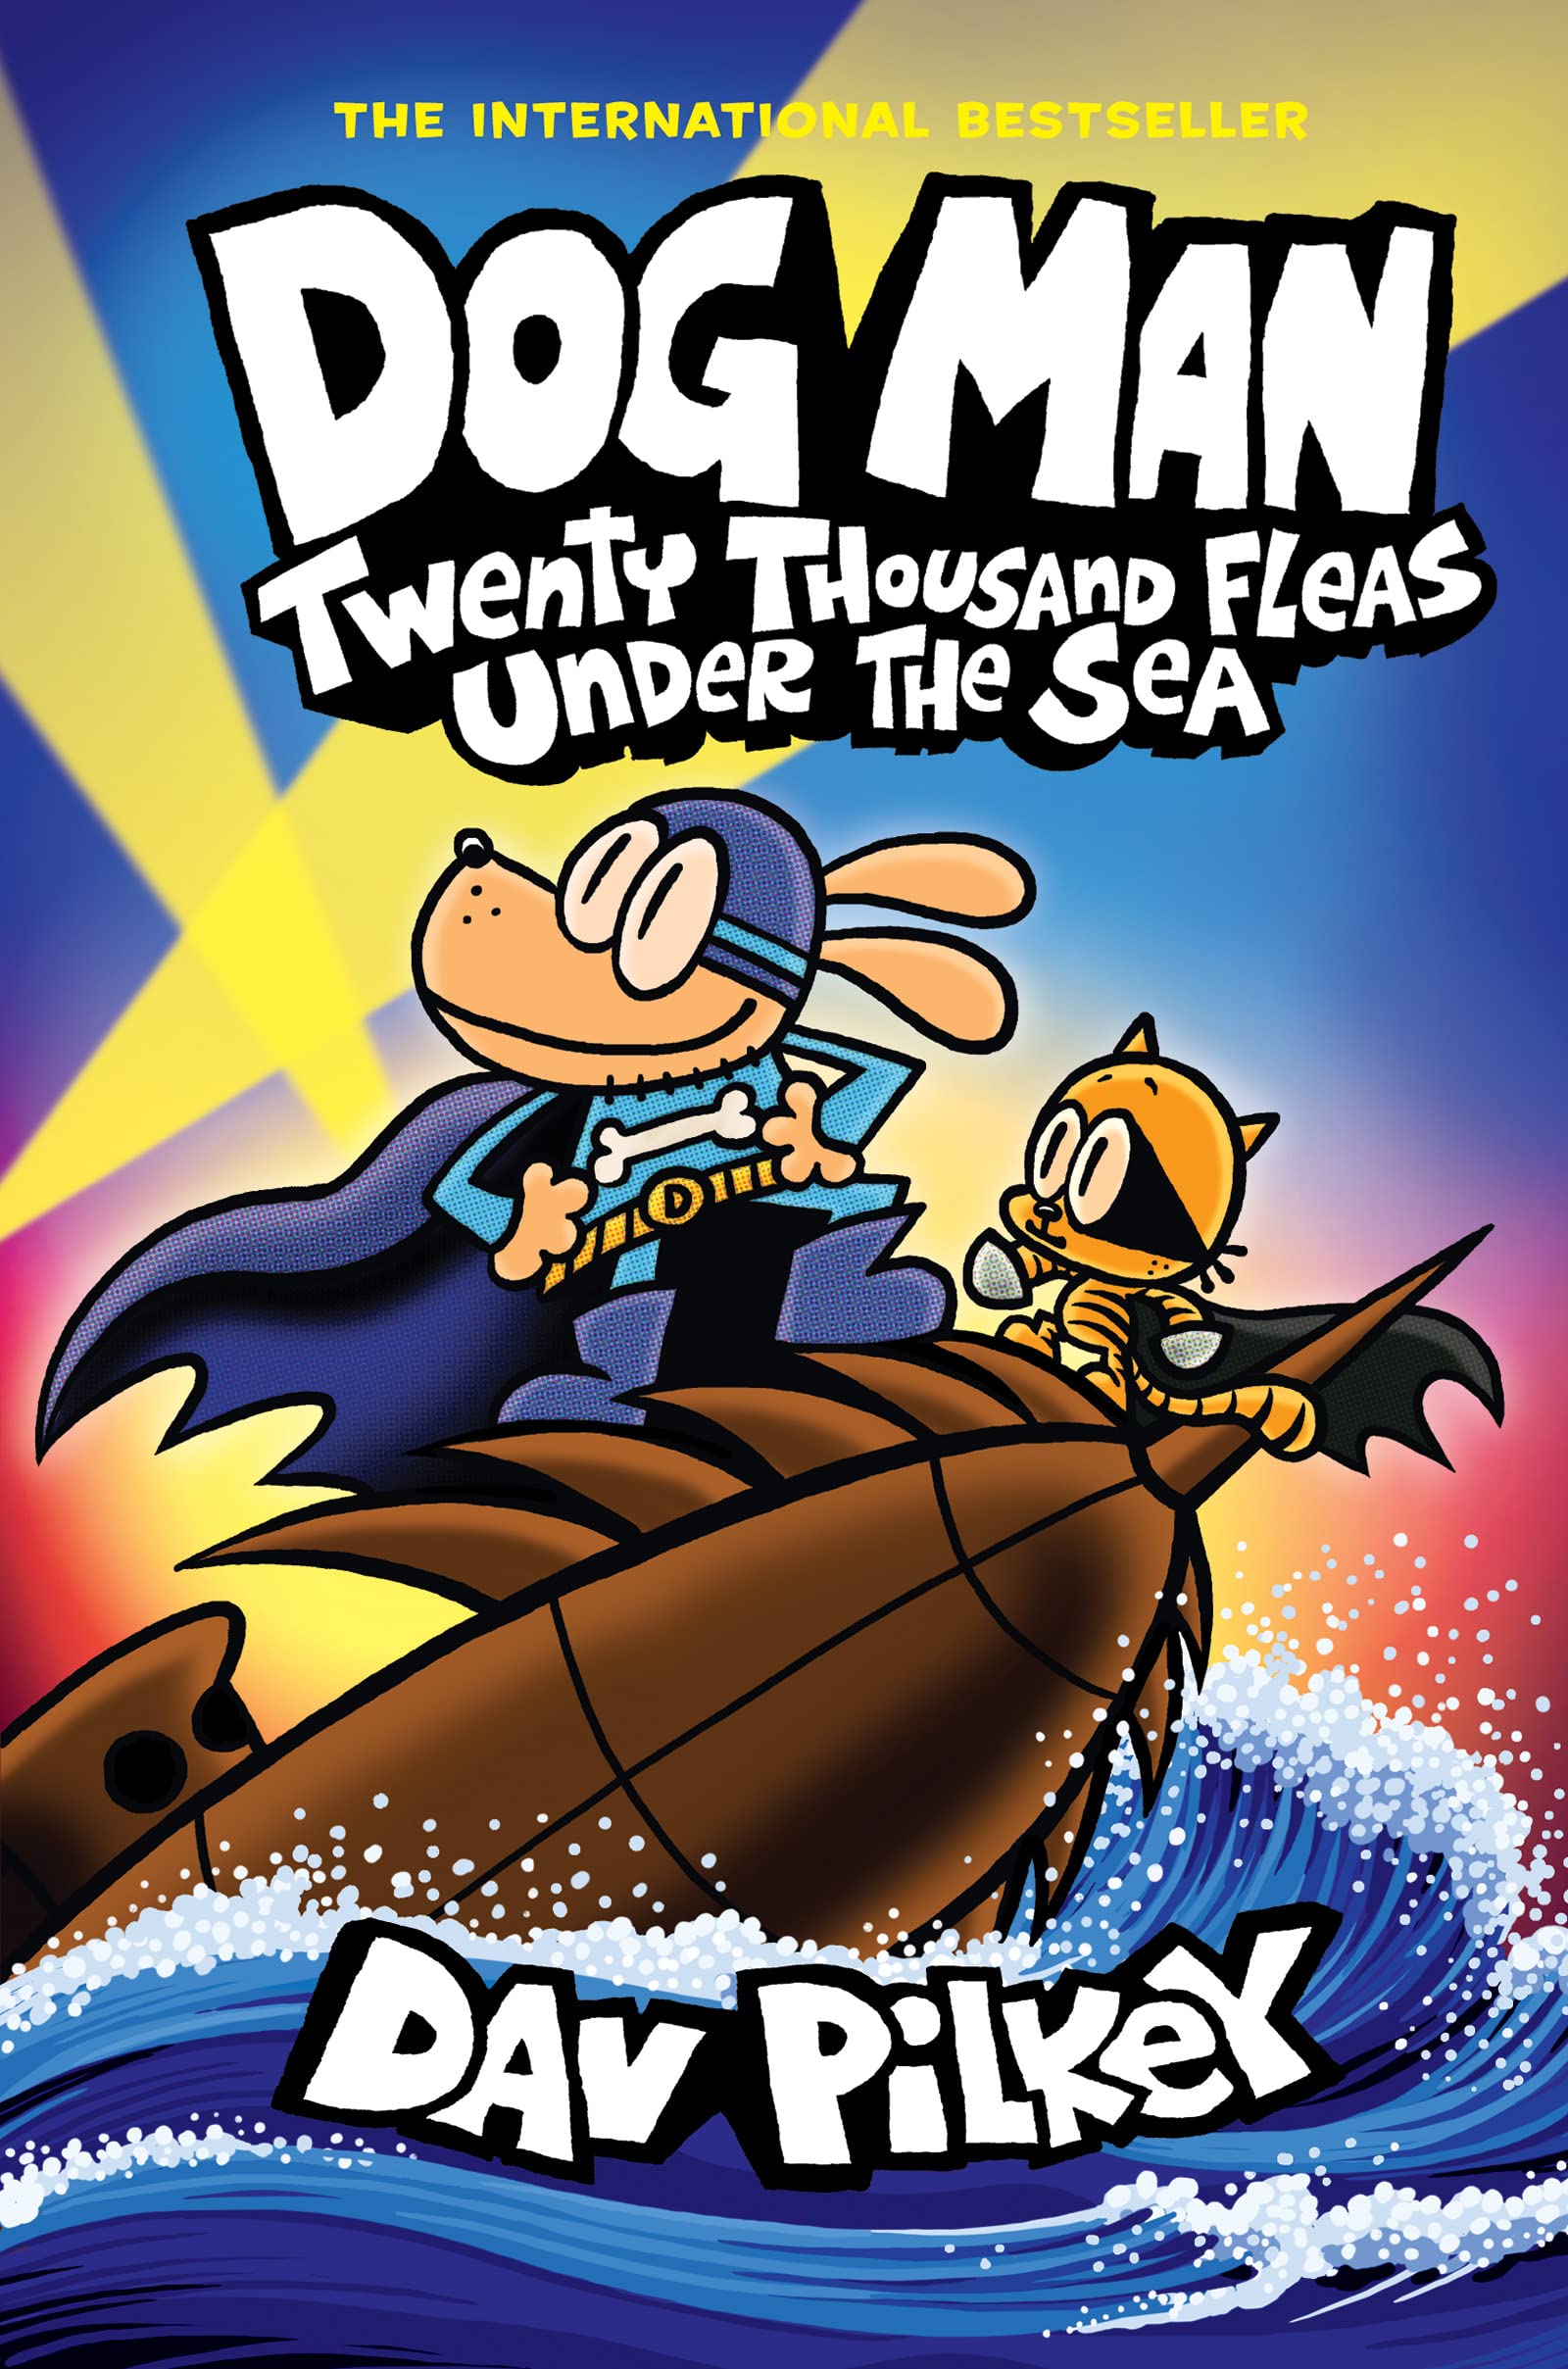 Twenty Thousand Fleas Under the Sea (Dog Man Series #11) by Dav Pilkey